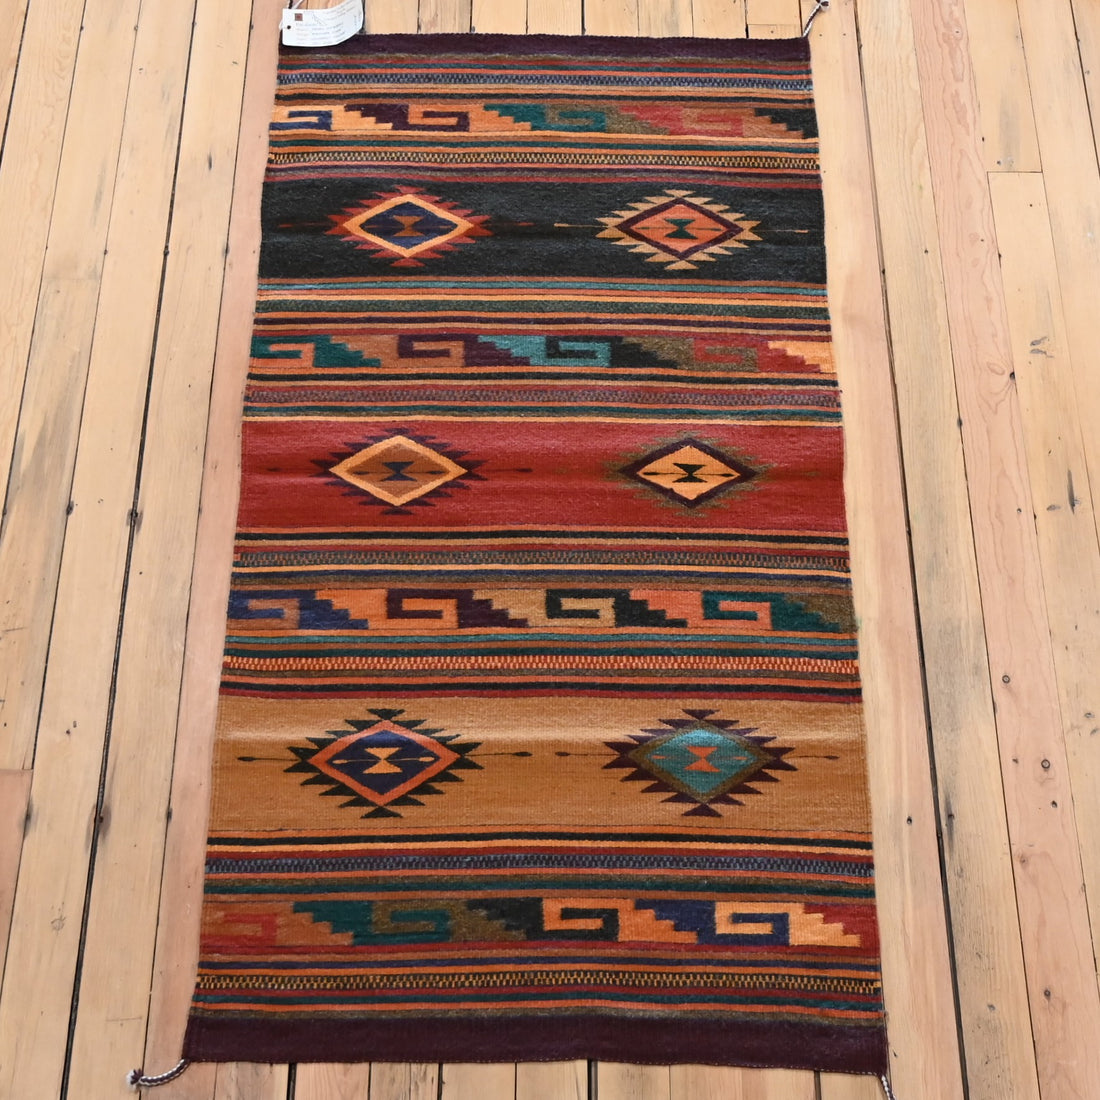 Escalante Rugs Hand Woven by Pedro Gutierrez view of rug